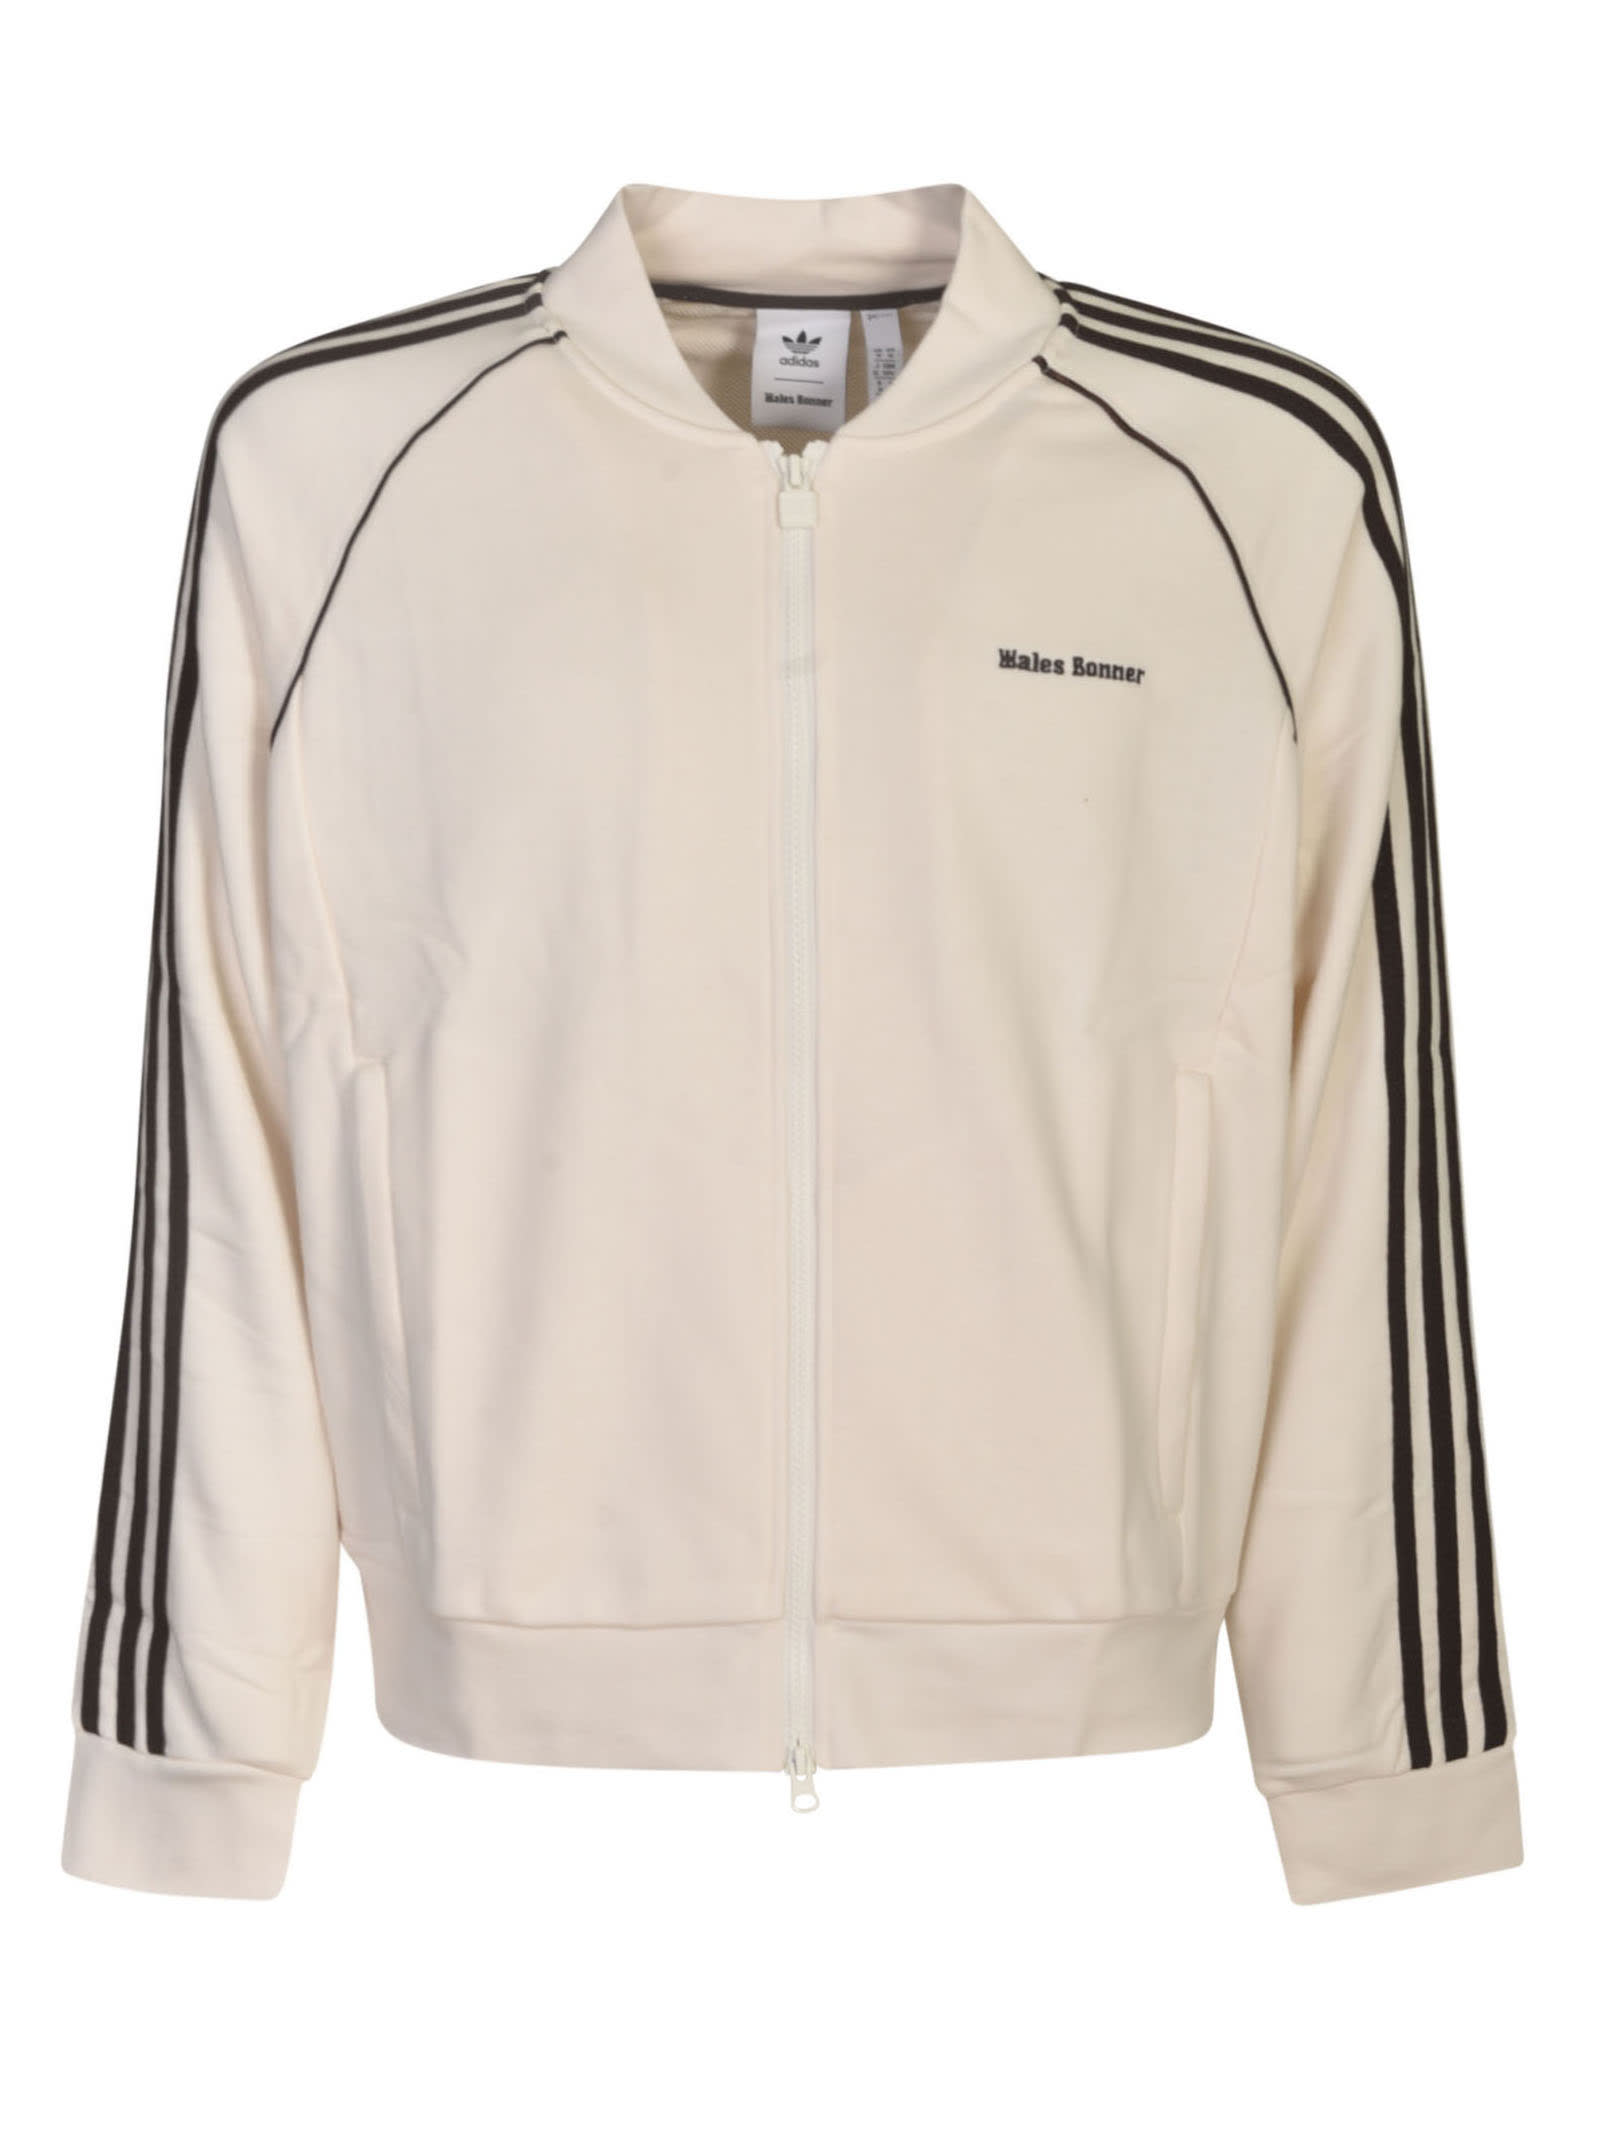 Adidas Originals By Wales Bonner Stripe Jacket In White